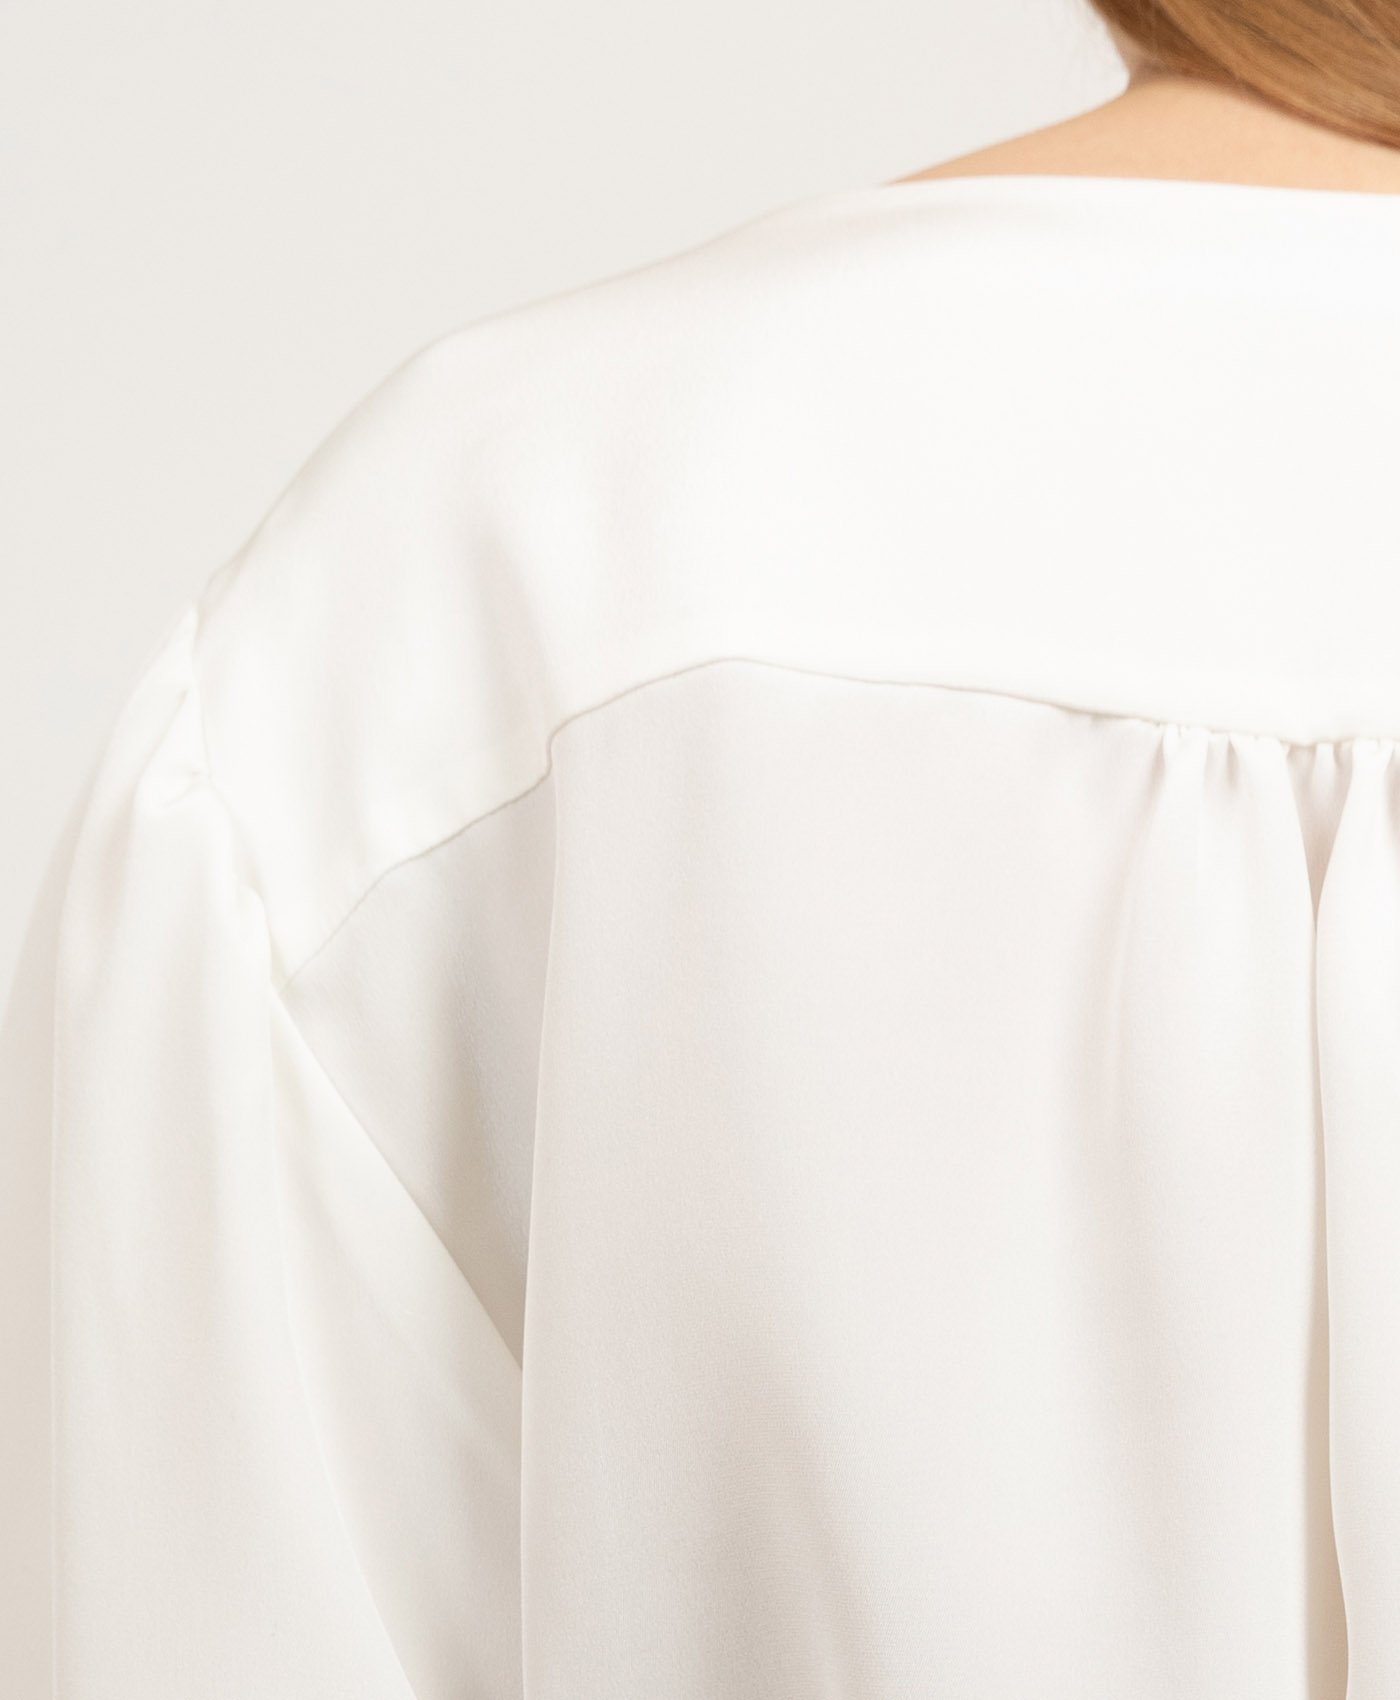 Blaze silk crepe blouse off-white by Studio Heijne